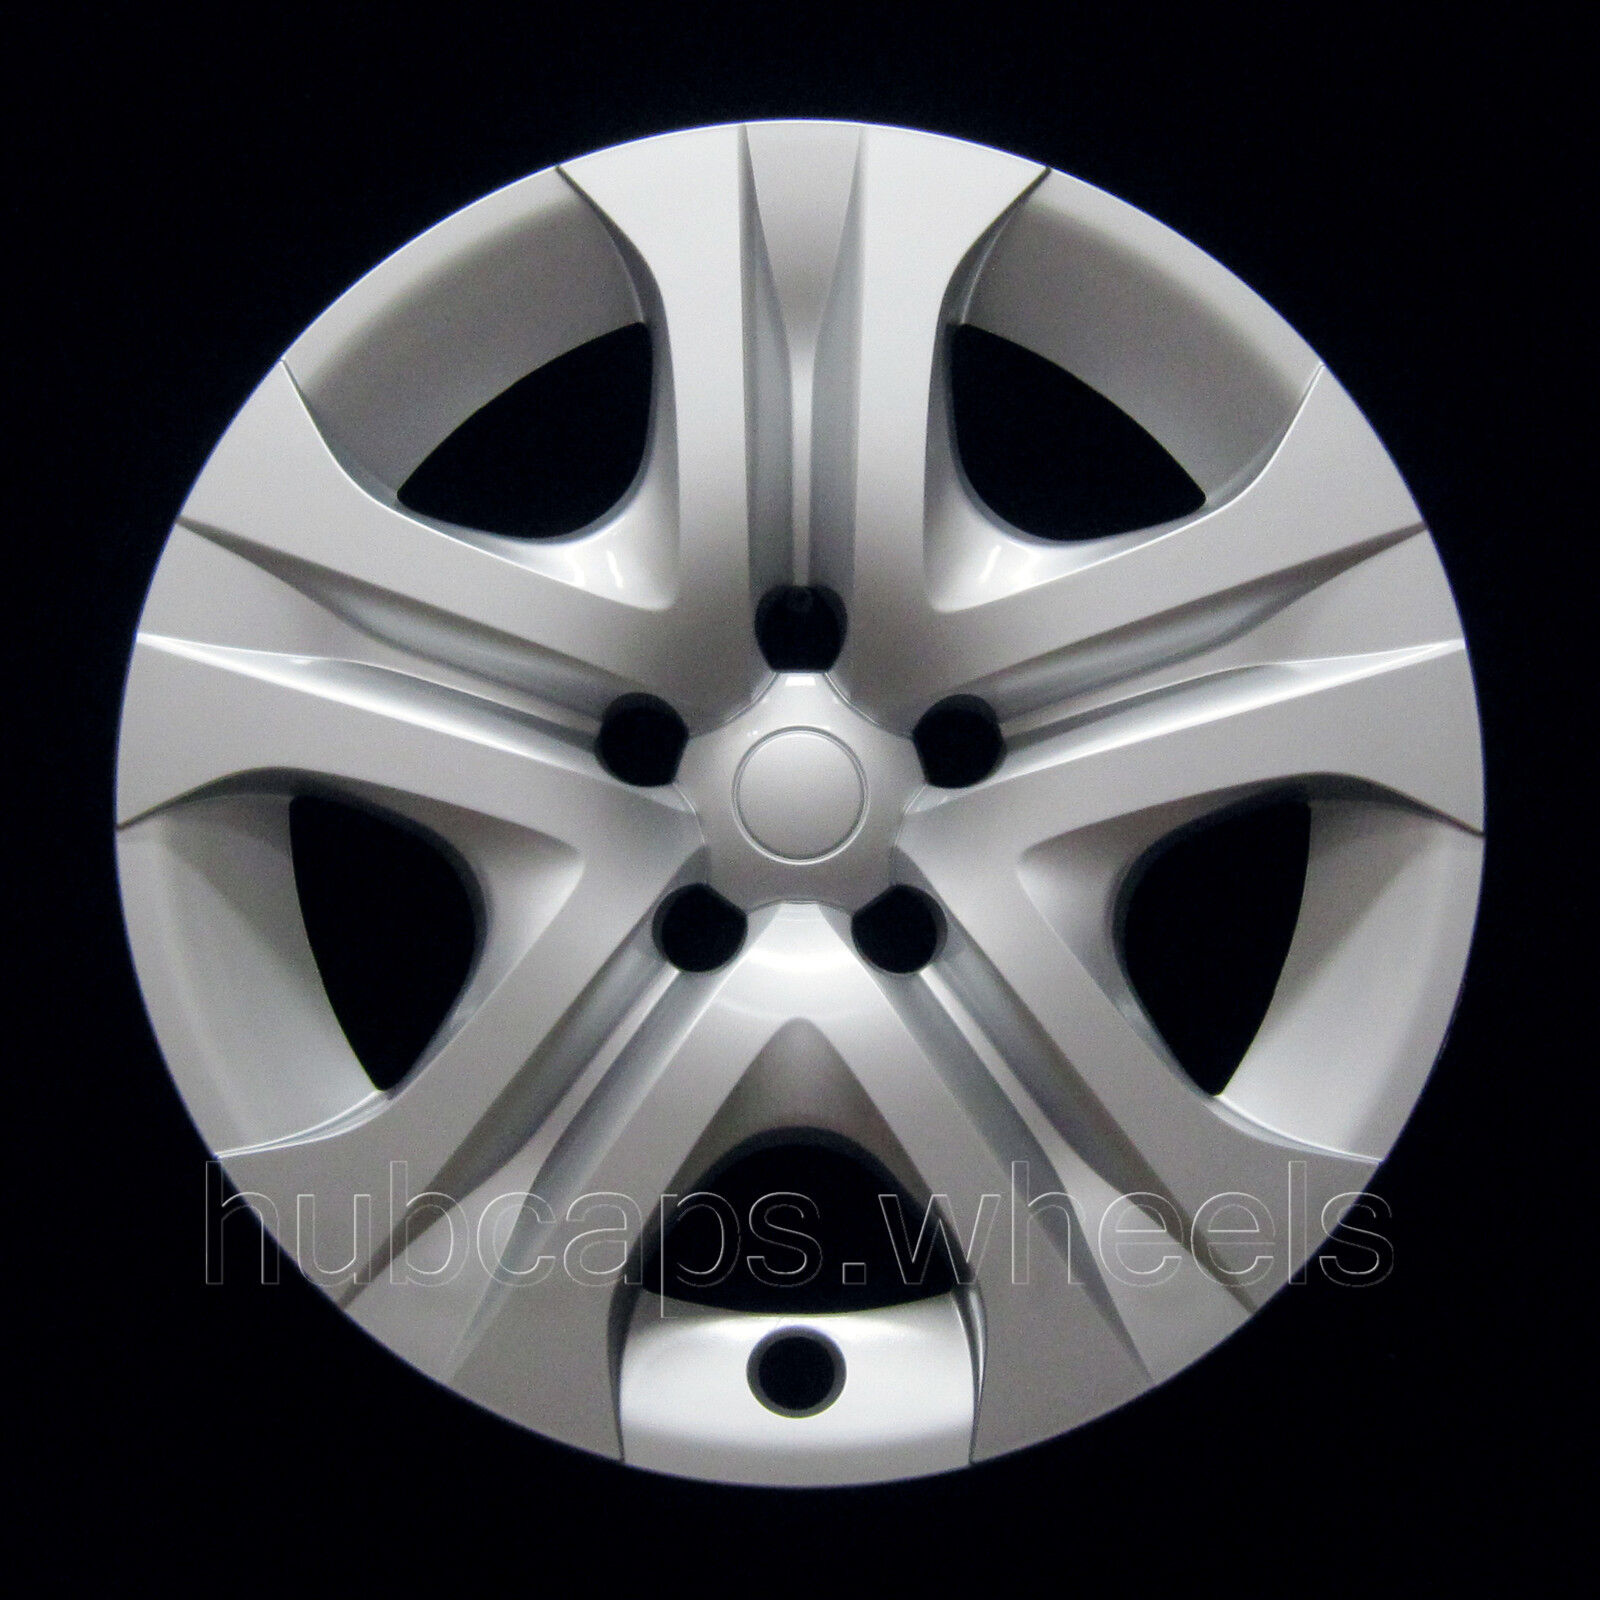 NEW Hubcap for Toyota Rav4 2013-2015 - Premium Replica 17-inch Wheel Cover 61170